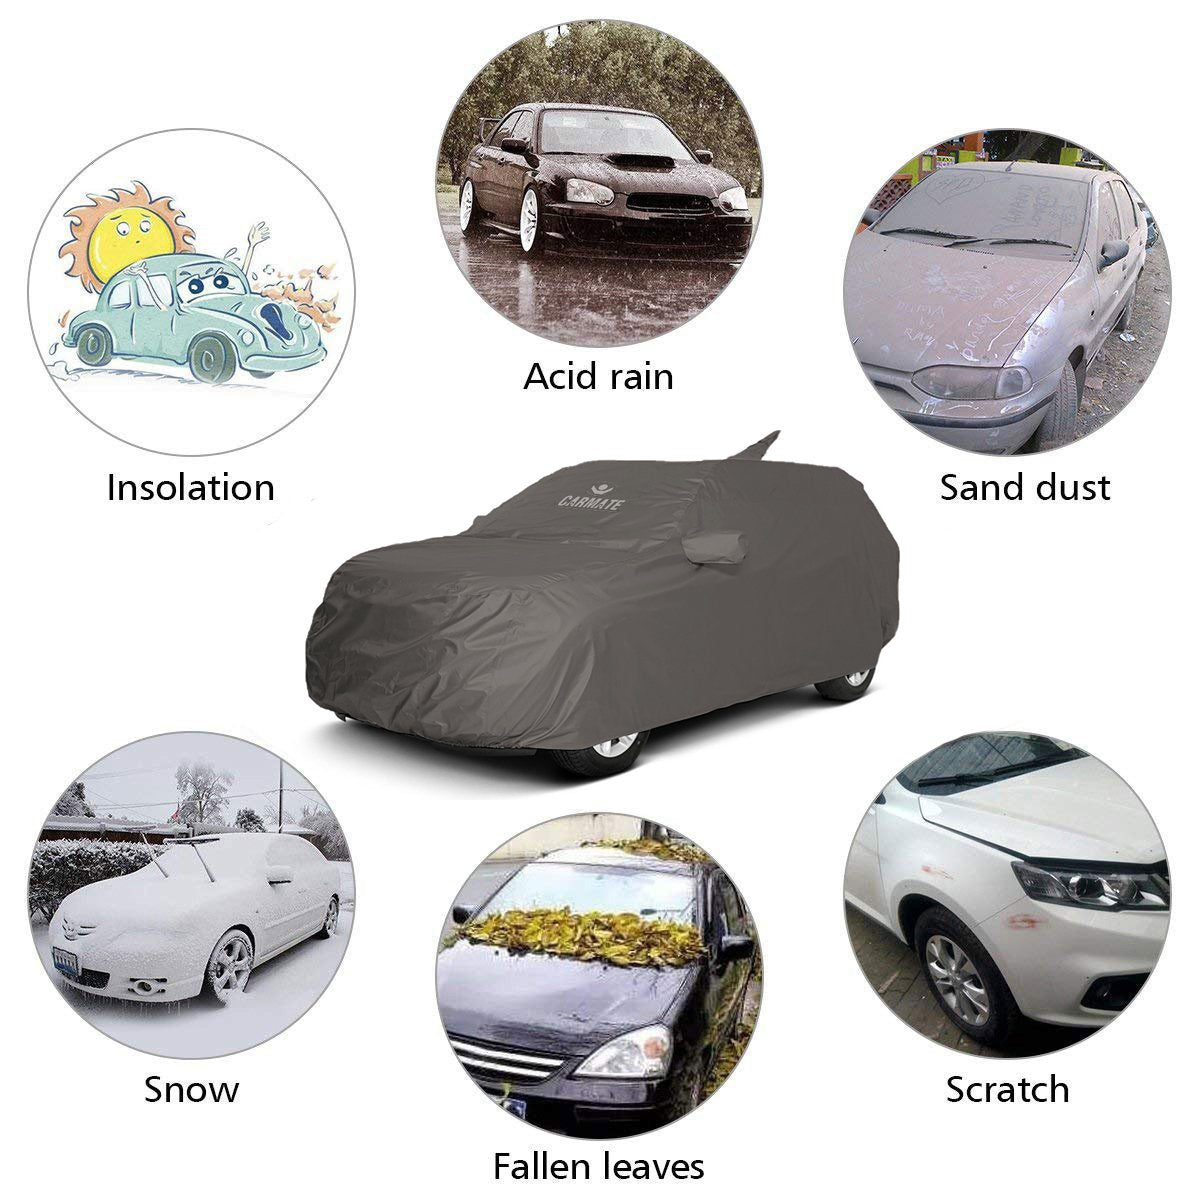 Carmate Car Body Cover 100% Waterproof Pride (Grey) for Toyota - Corolla Altis 2018 - CARMATE®